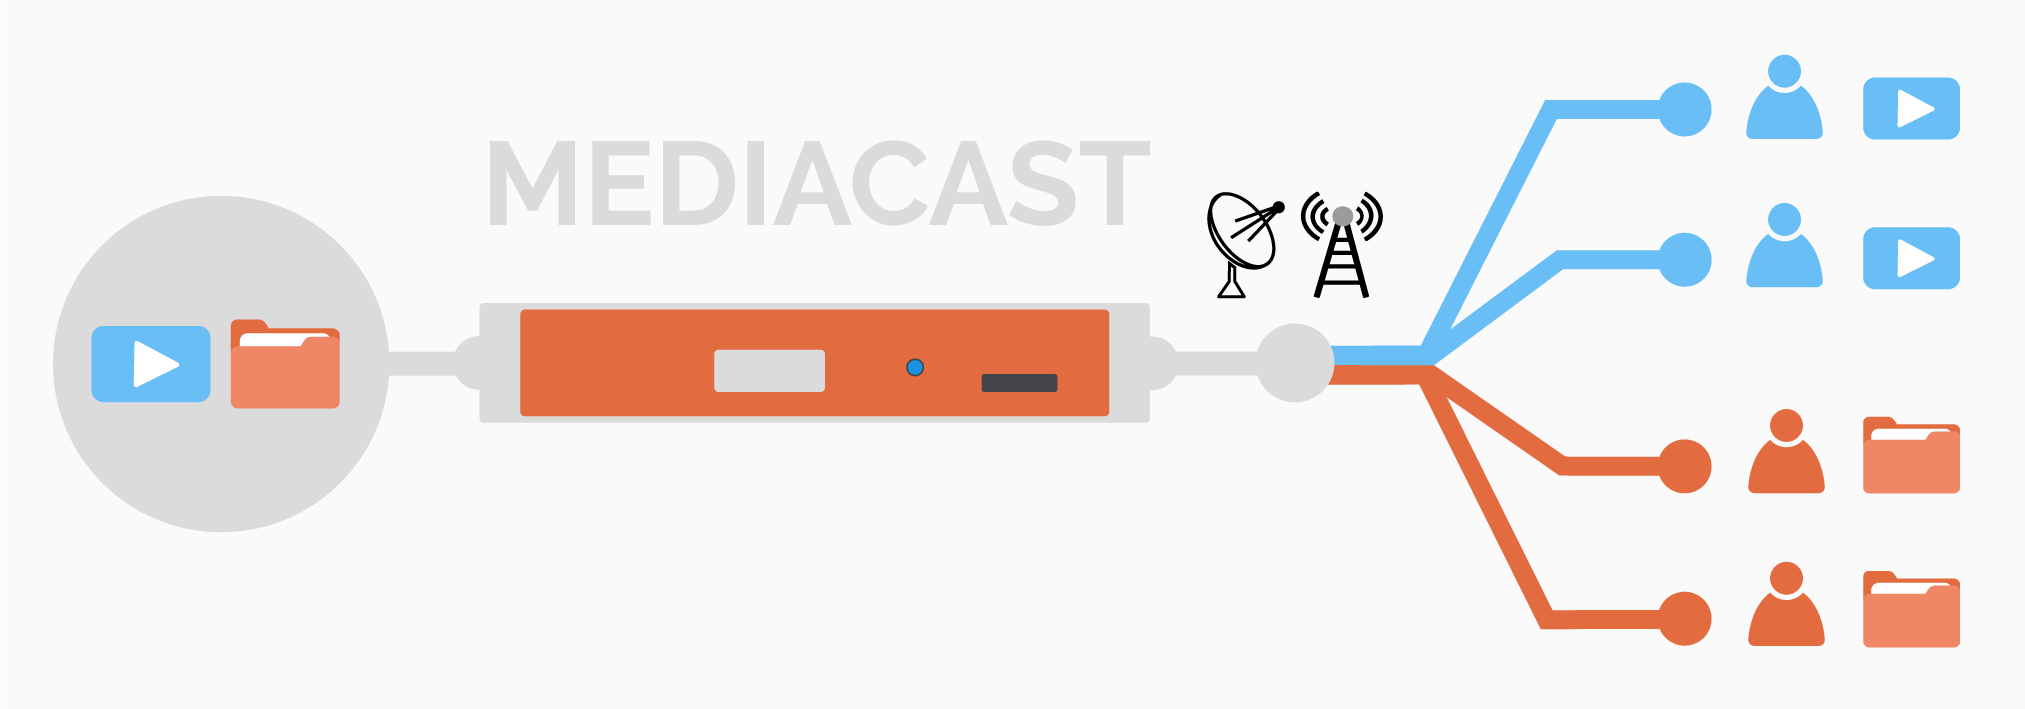 Mediacast - Maindata Multicast solution